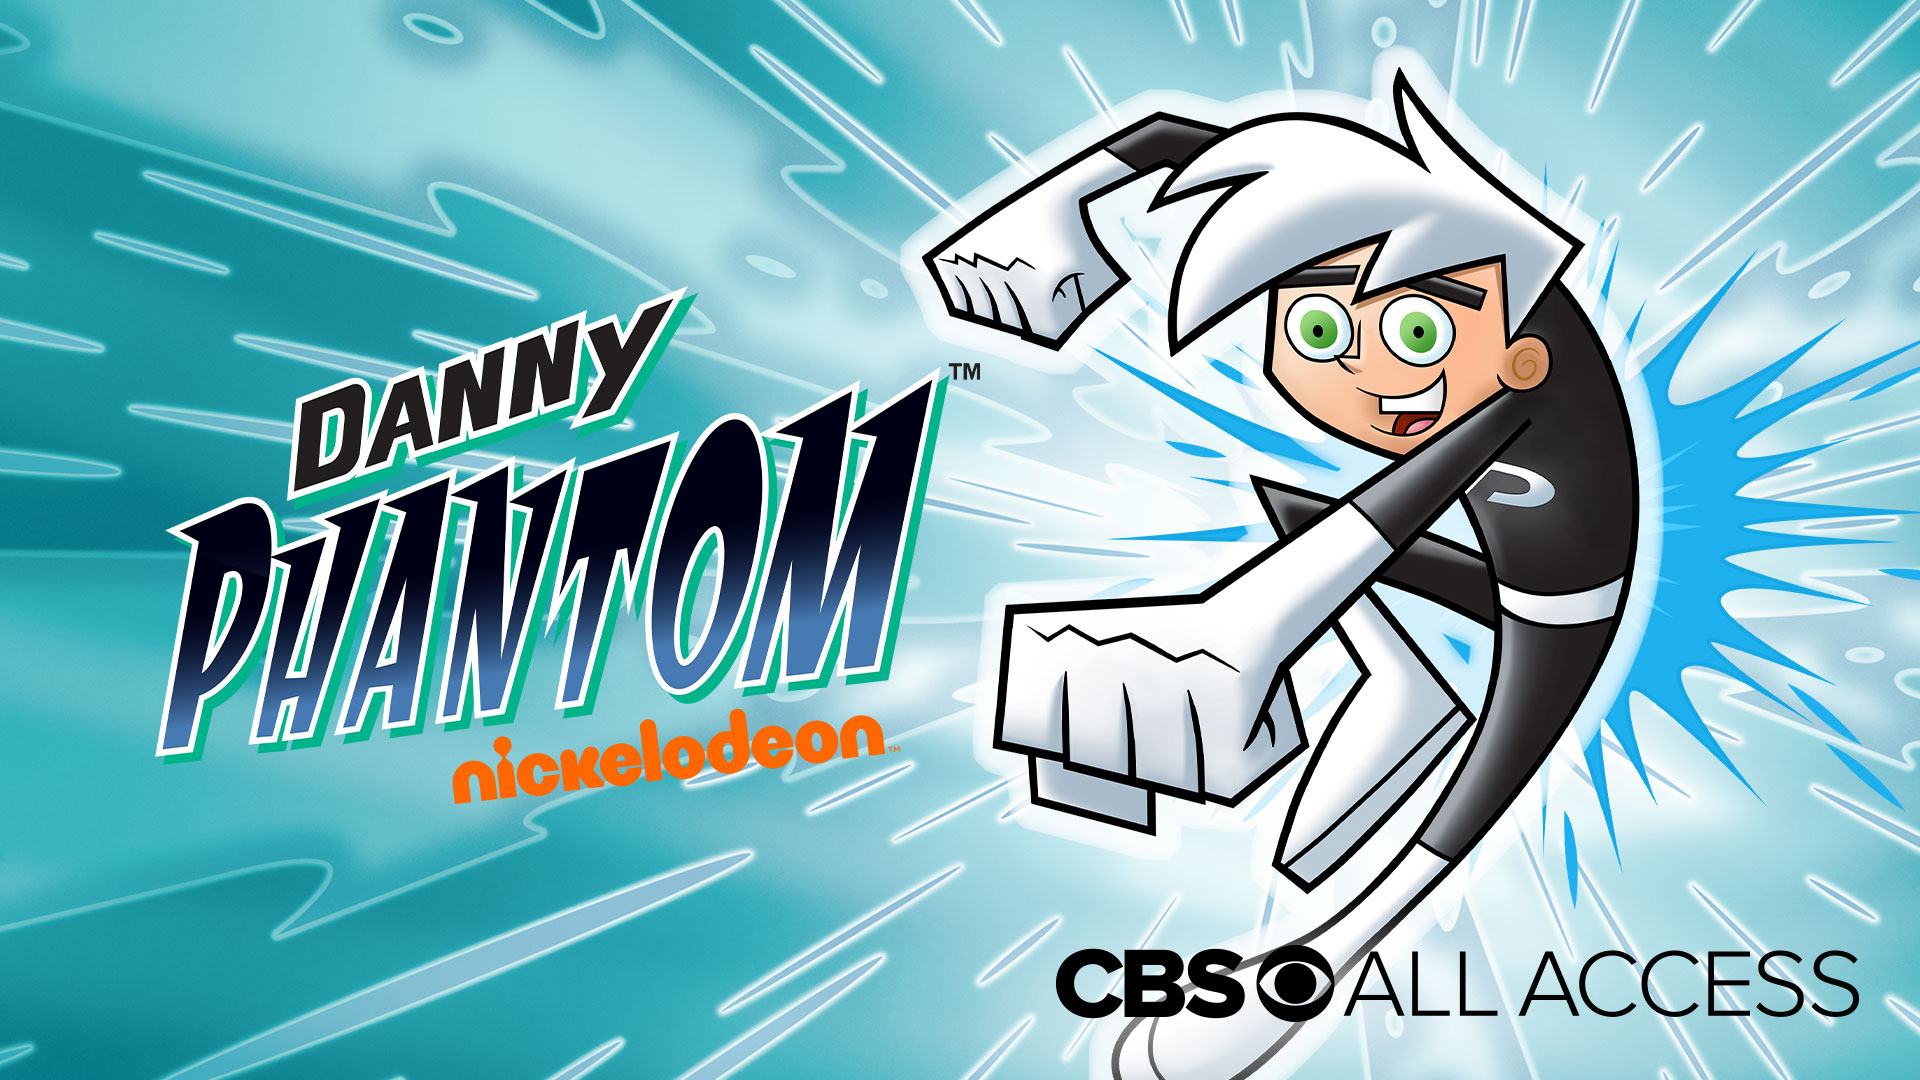 Best of Danny phantom season 3 episode 13